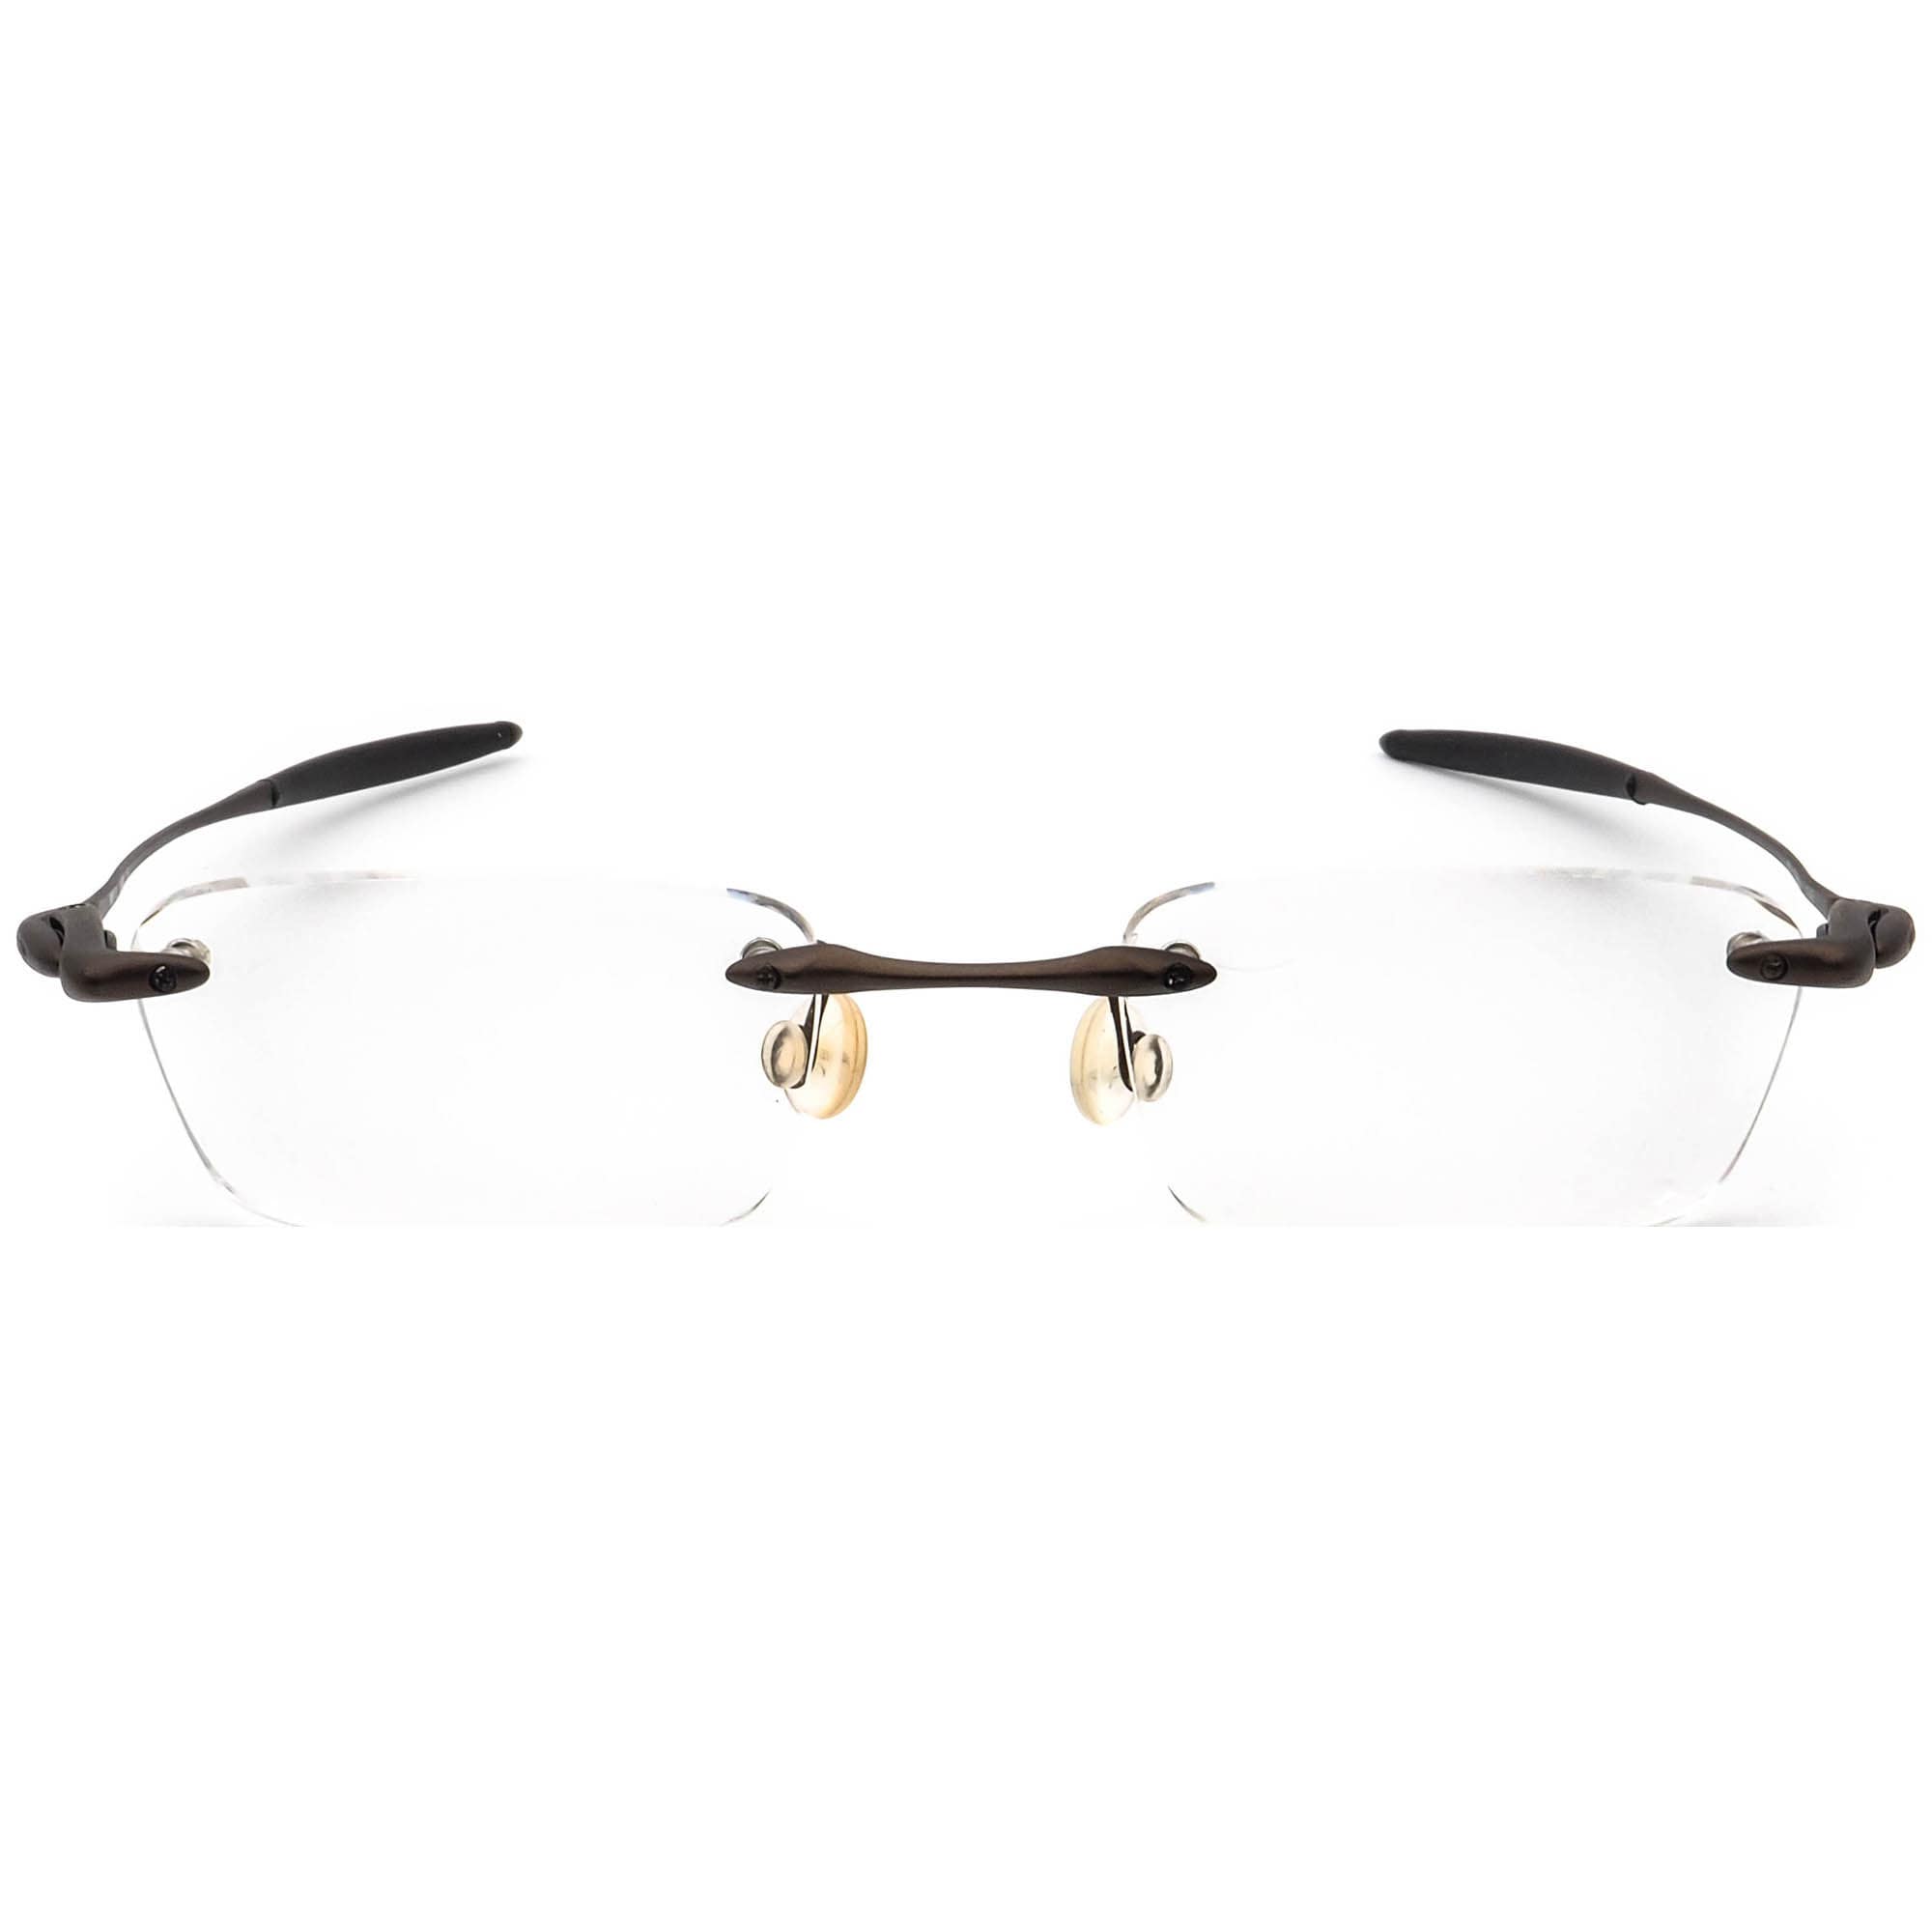 Chanel Eyeglasses 3057 c.713 Brown/Black/Gold Rectangular Frame Italy  51[]16 135